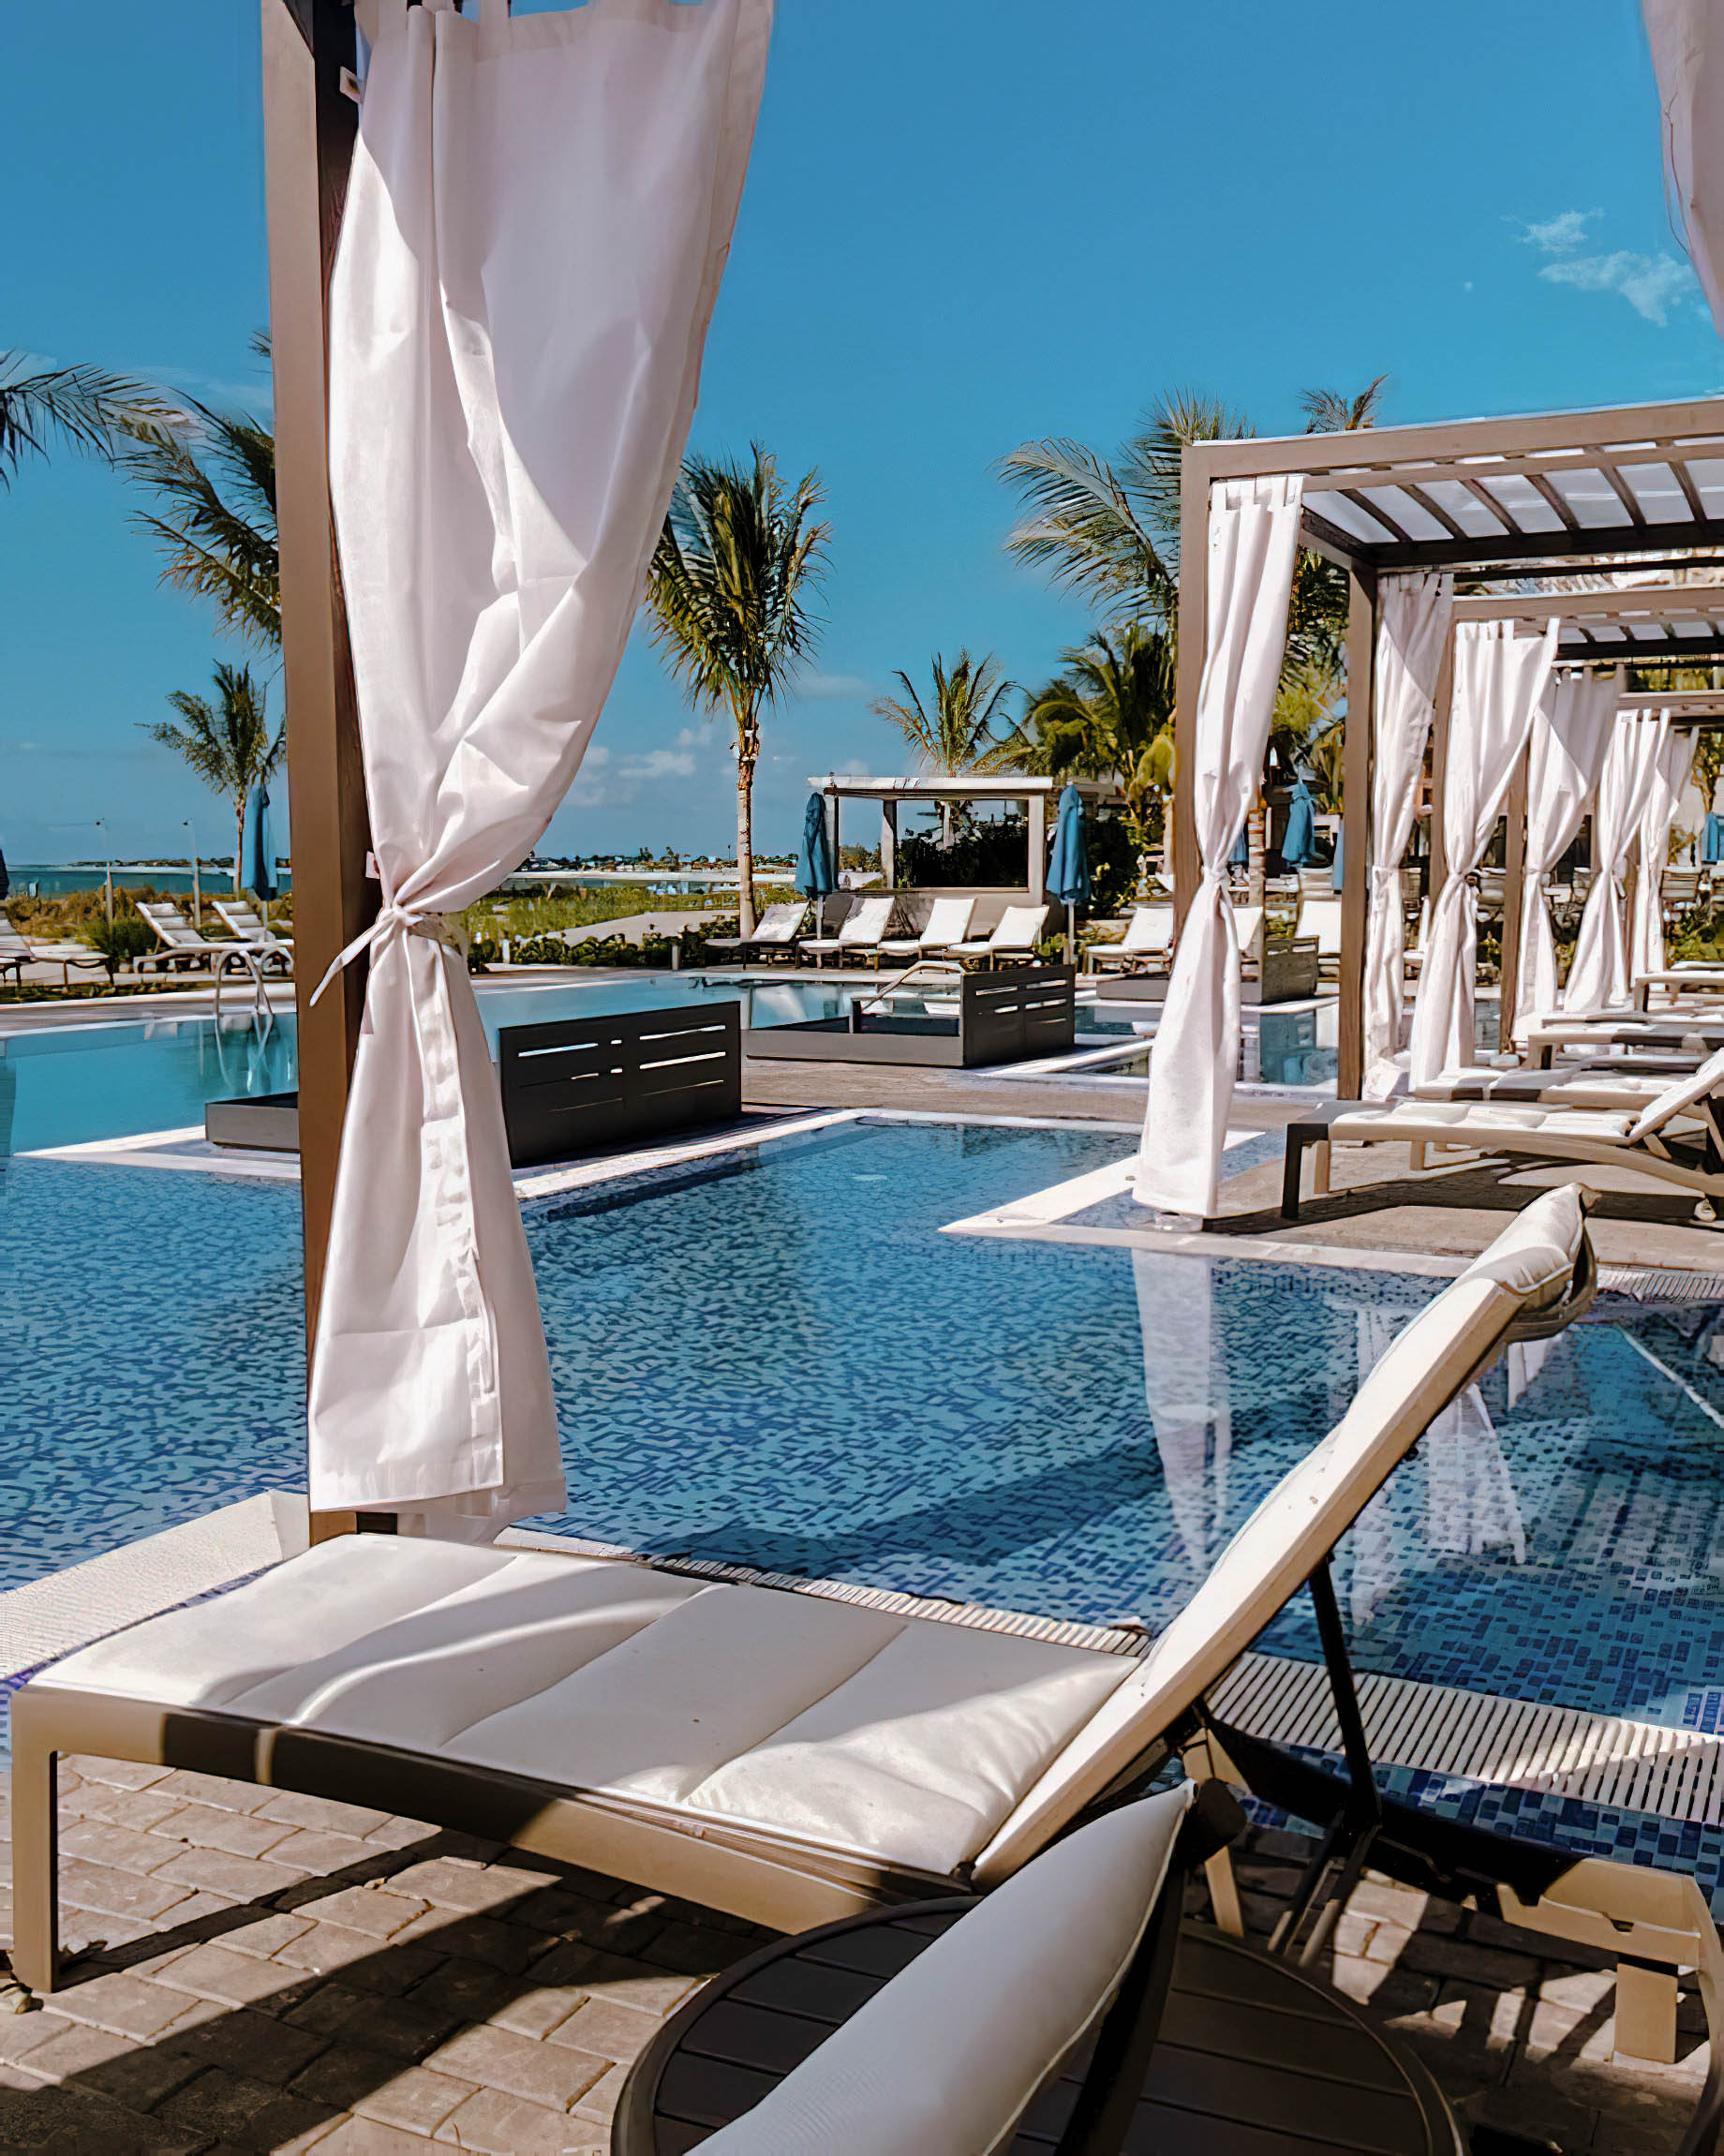 The Ritz-Carlton, Turks & Caicos Resort – Providenciales, Turks and Caicos Islands – Pool Deck